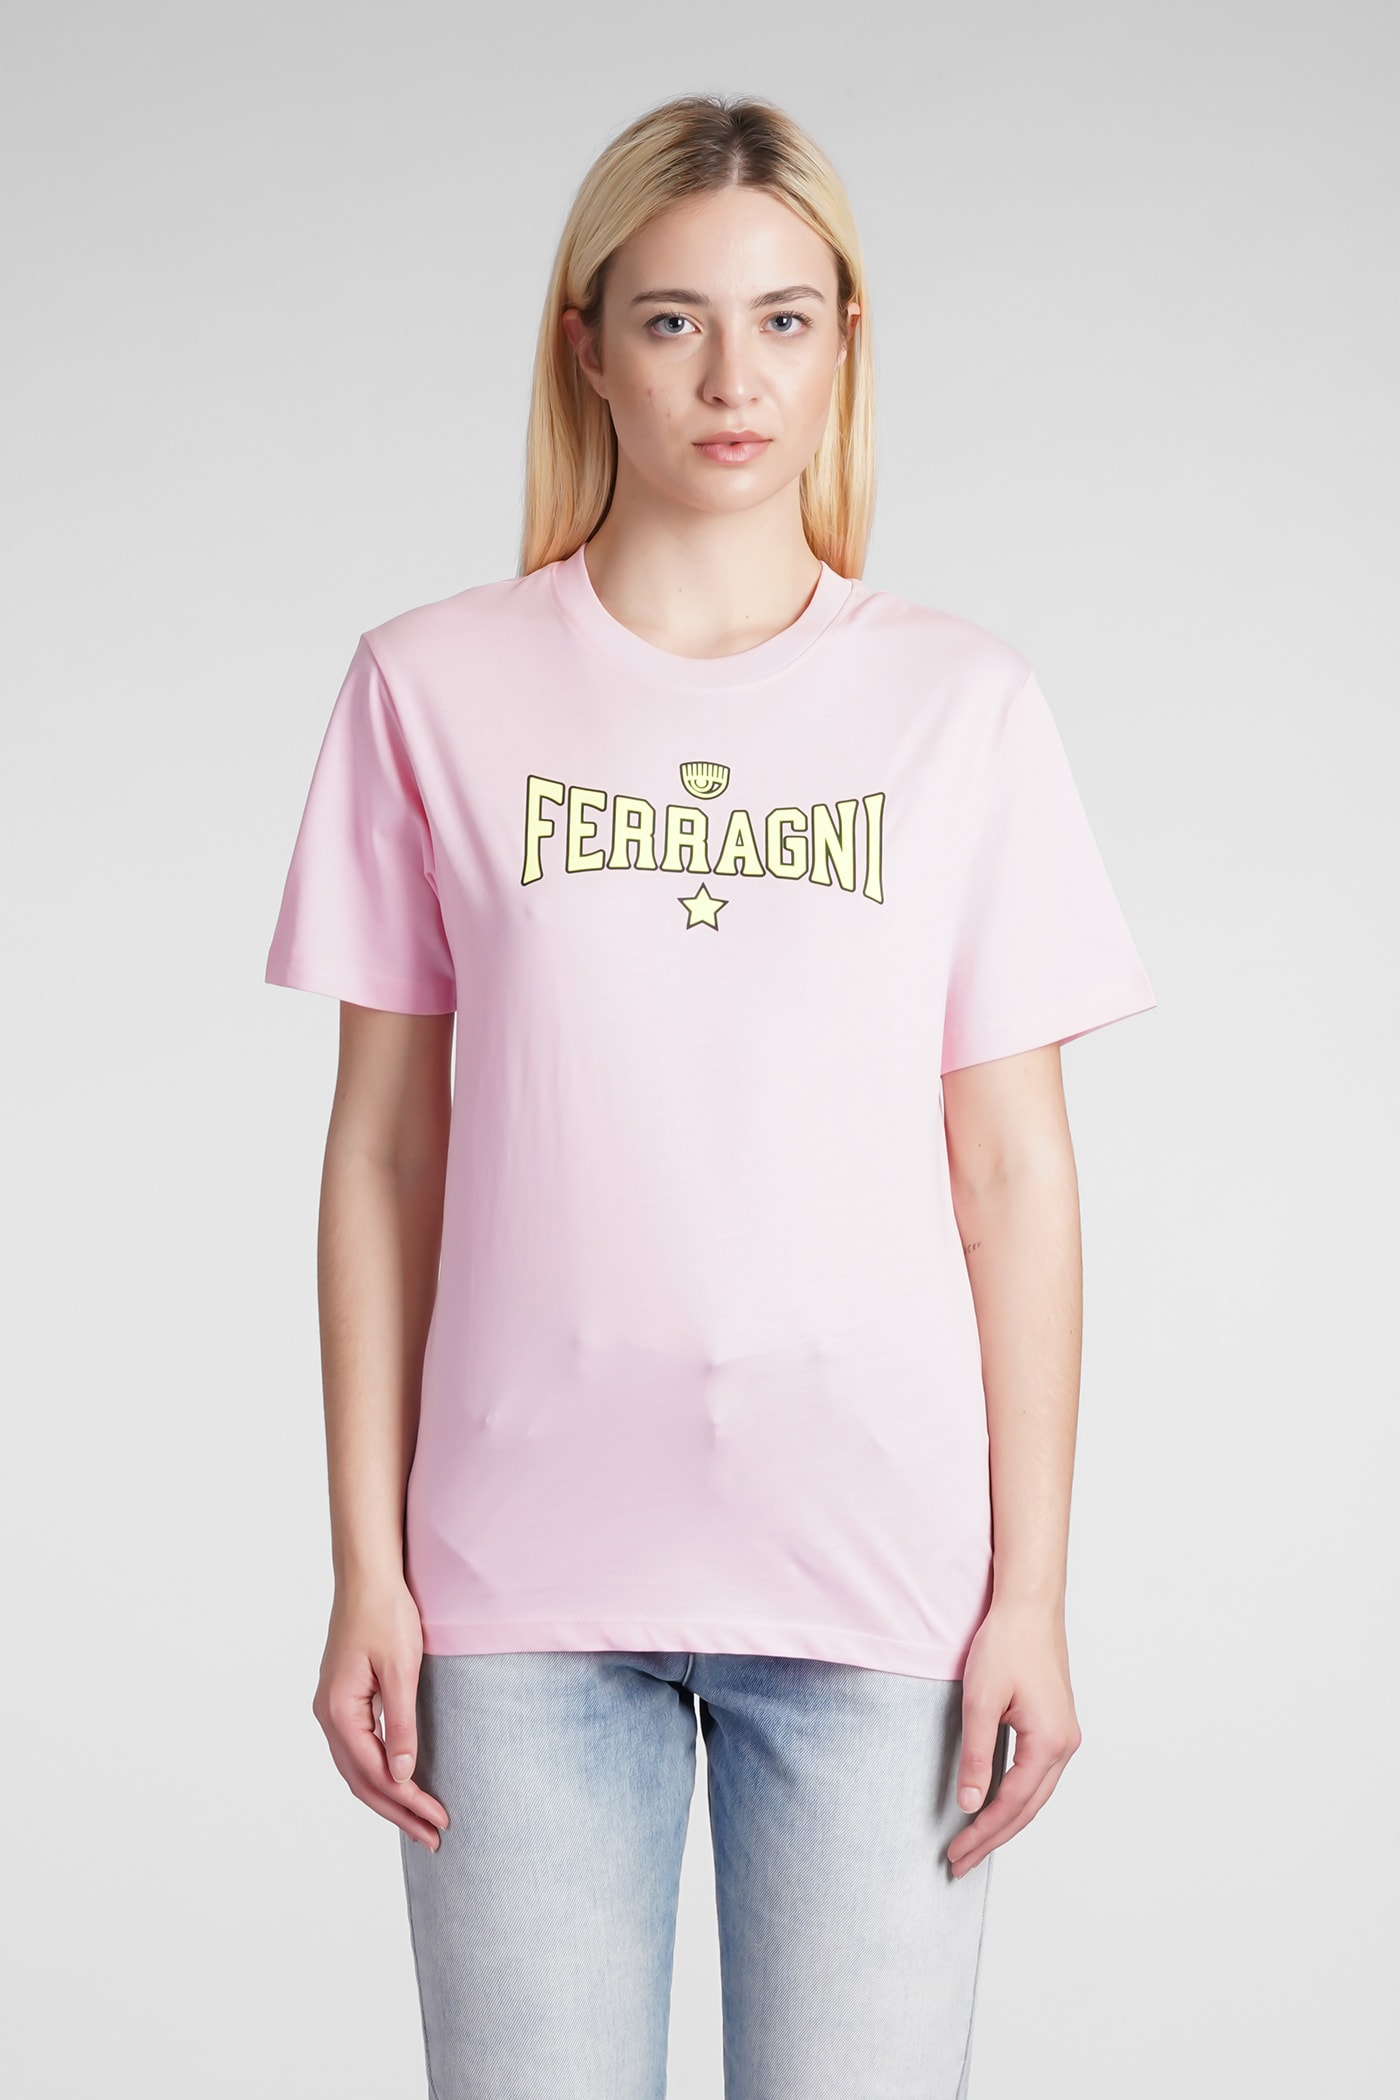 CHIARA FERRAGNI T-SHIRT IN ROSE-PINK COTTON